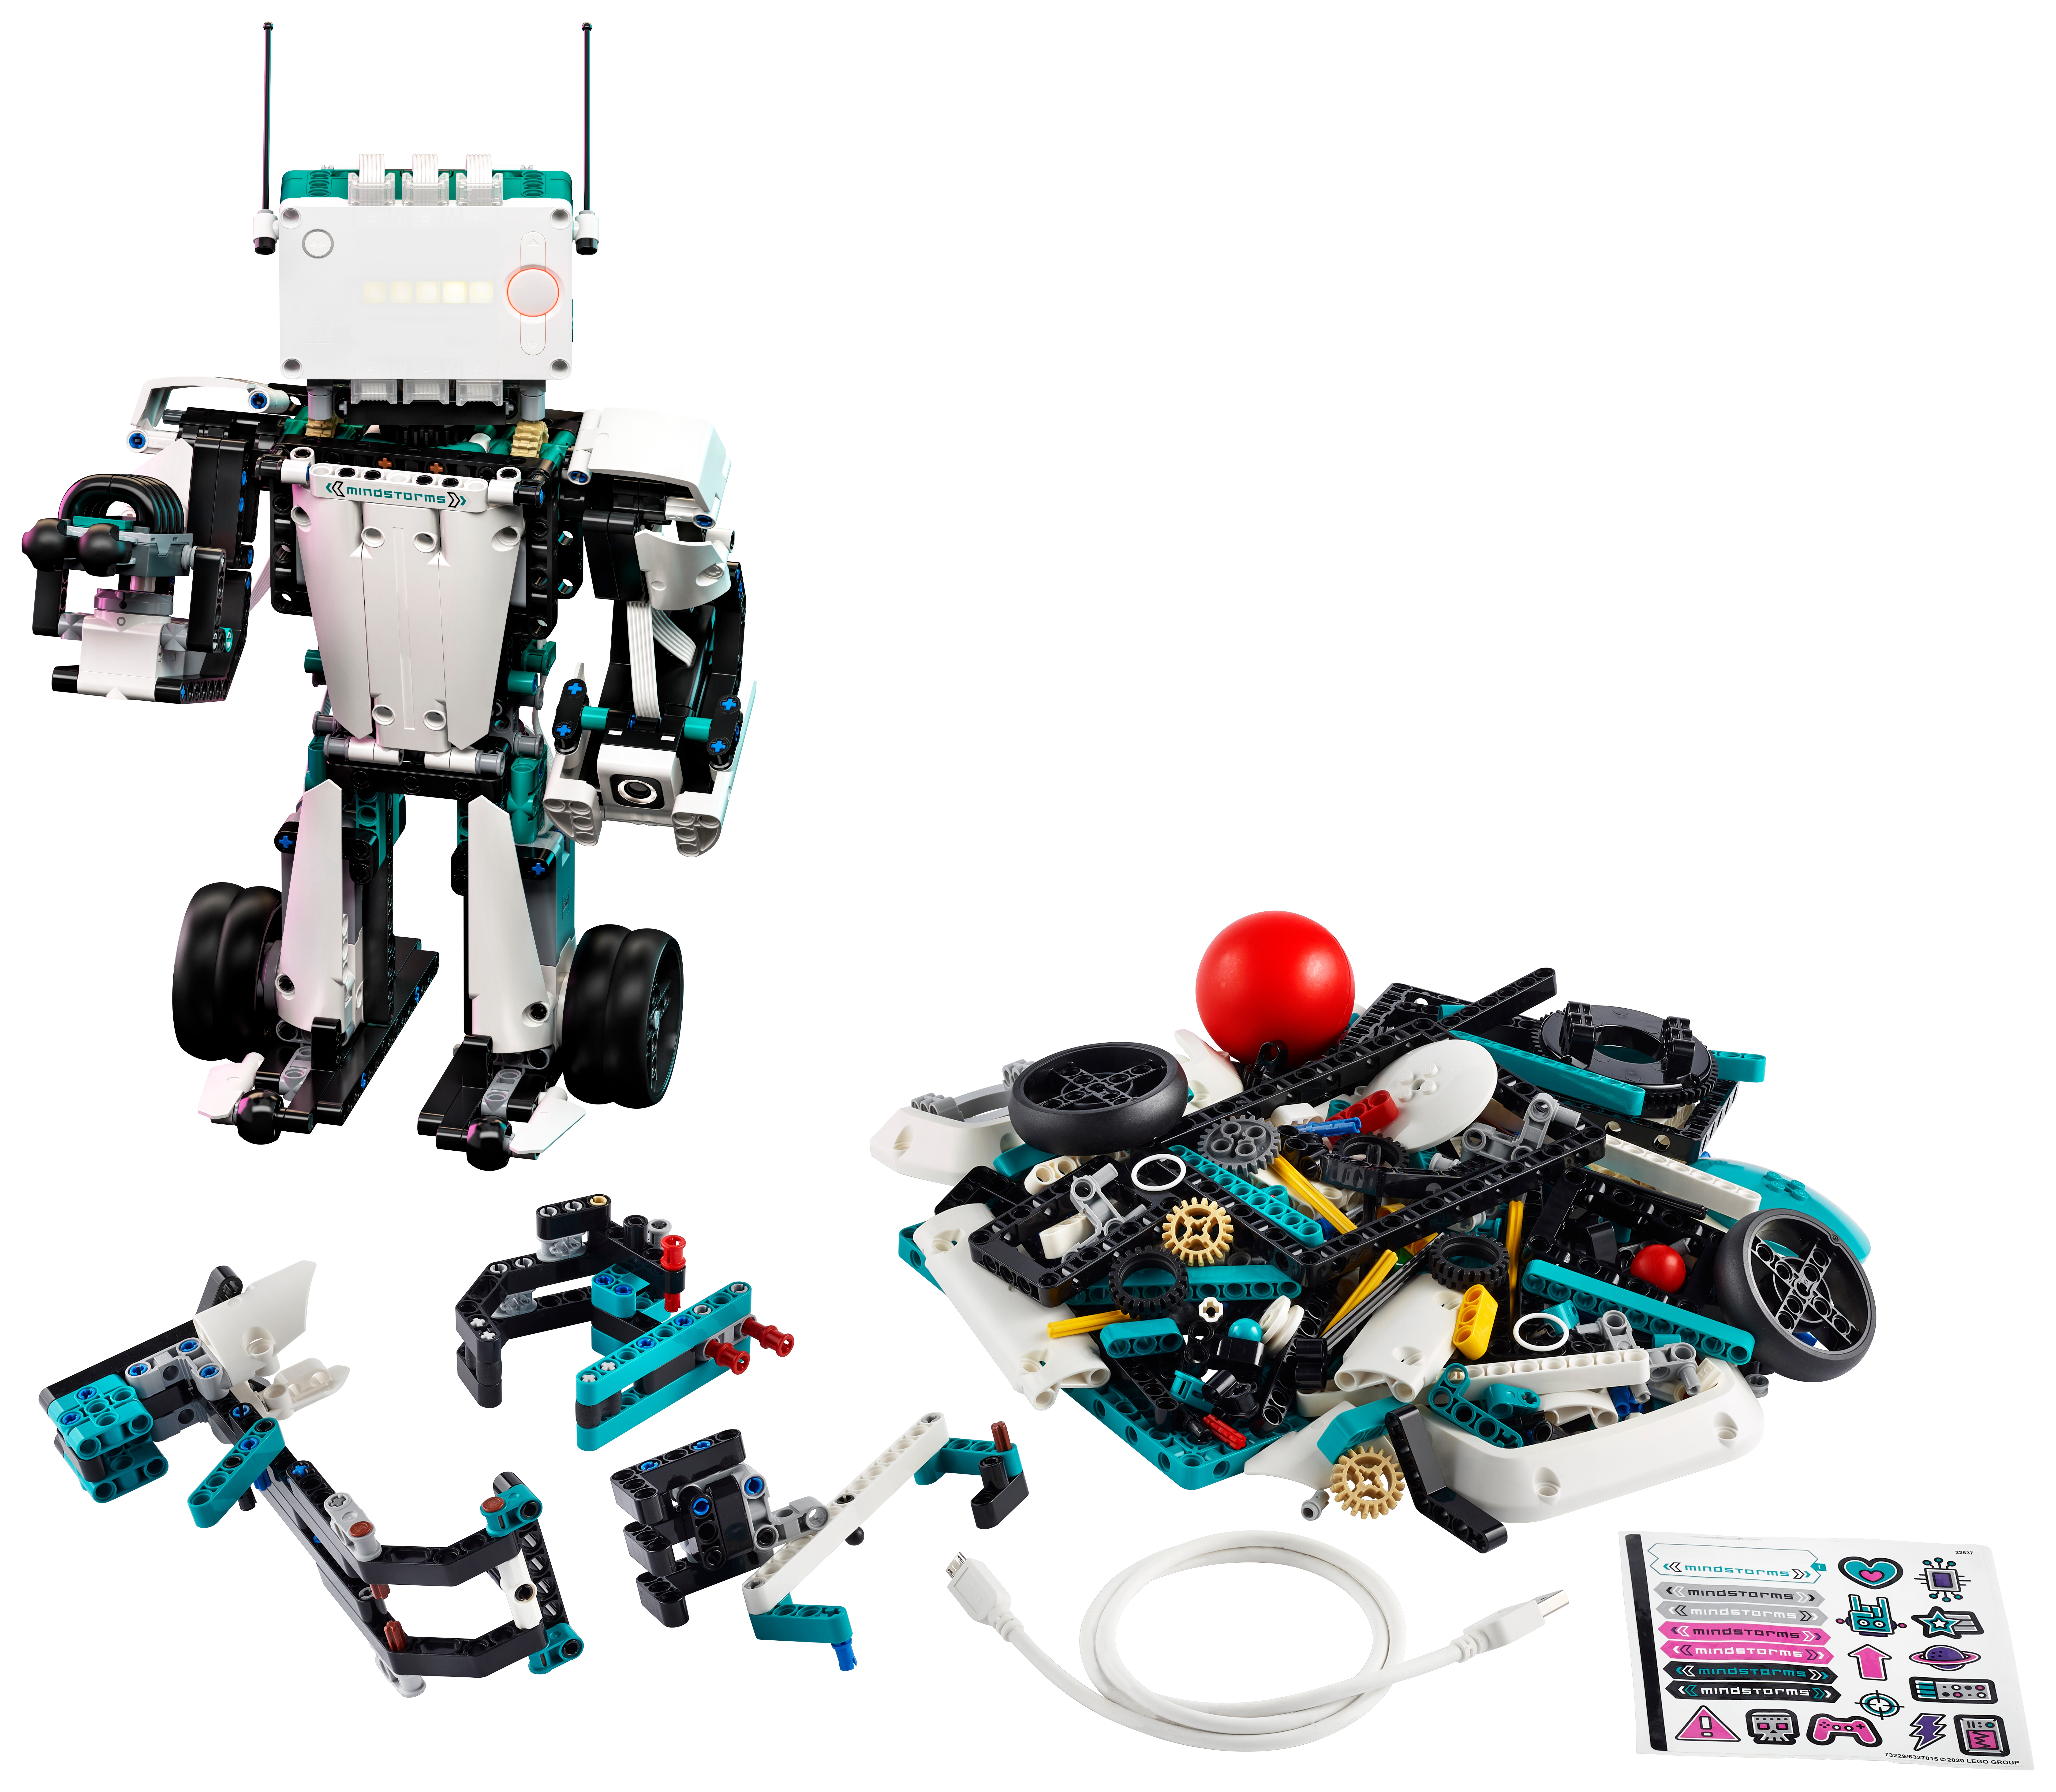 LEGO MINDSTORMS Robot Inventor About - LEGO.com